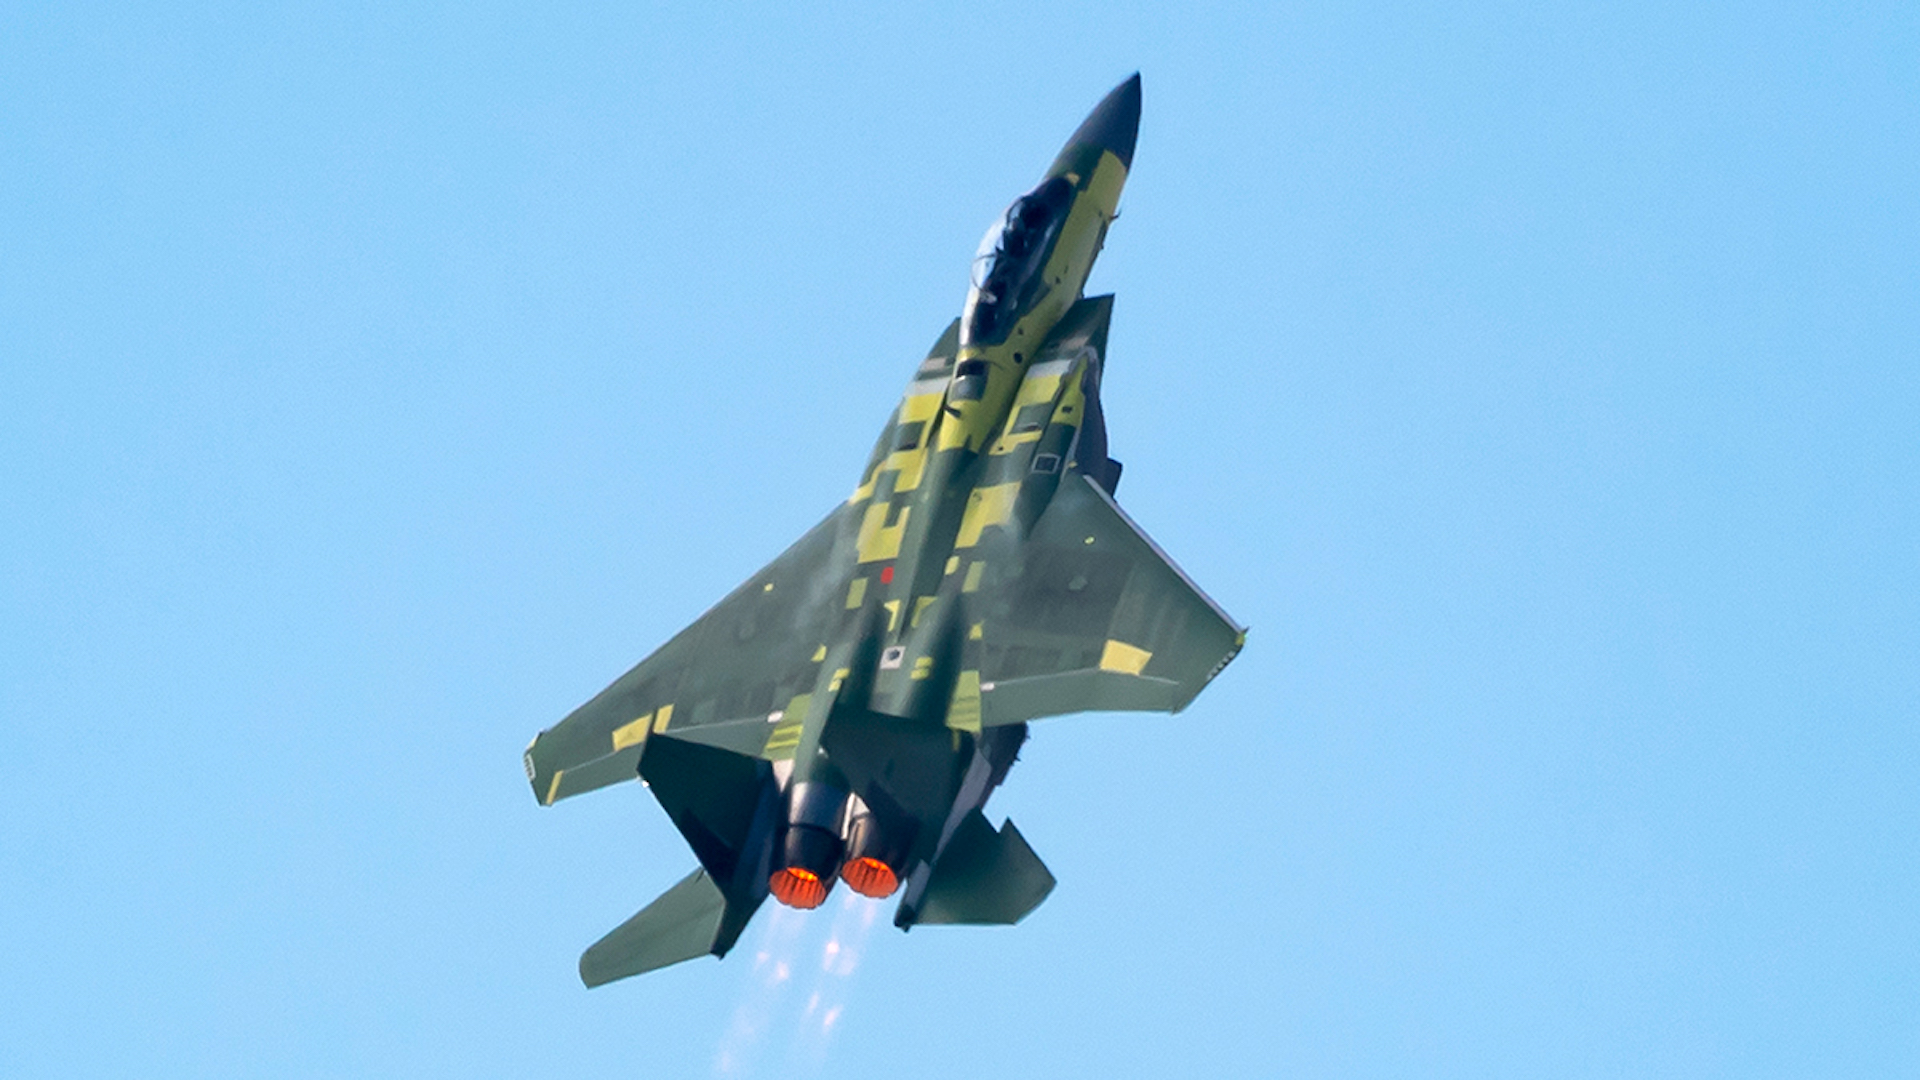 F 15ex Fighter Jet Makes Maiden Flight With Viking Takeoff